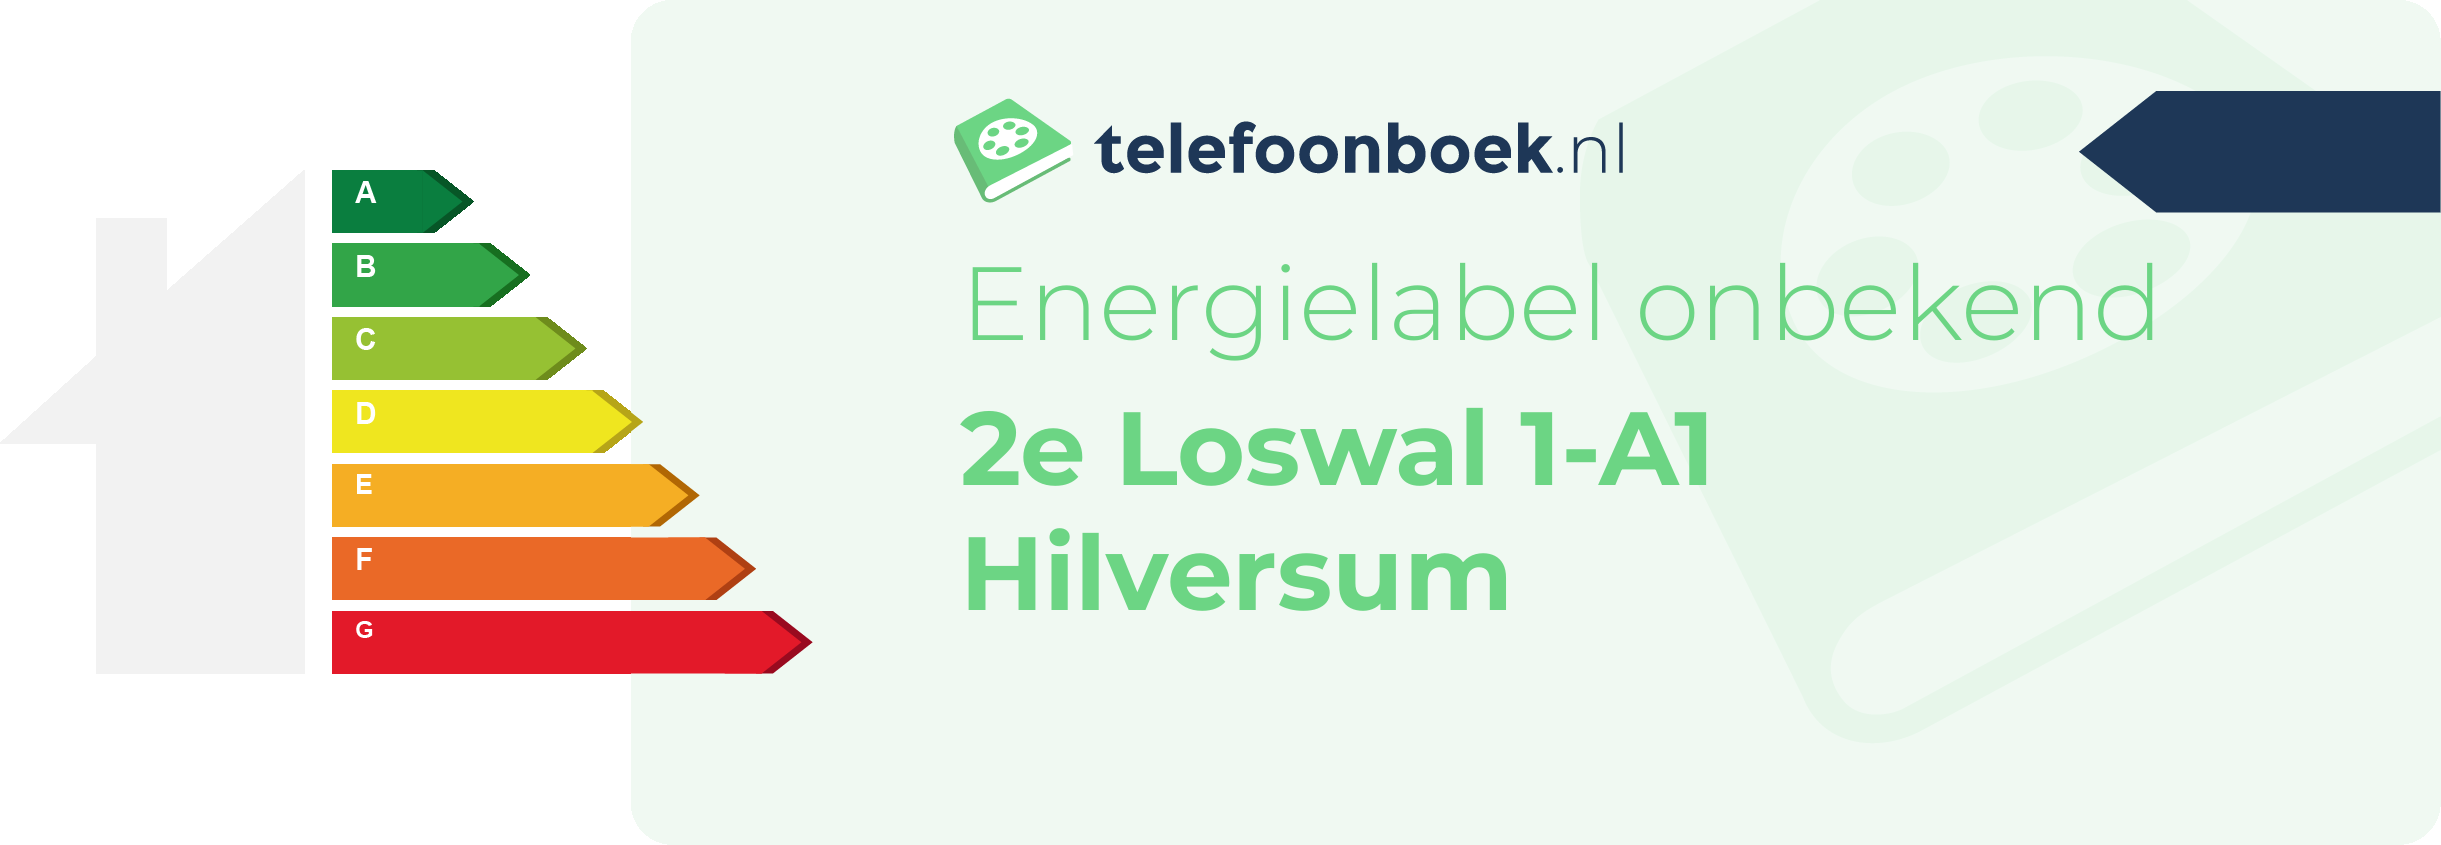 Energielabel 2e Loswal 1-A1 Hilversum